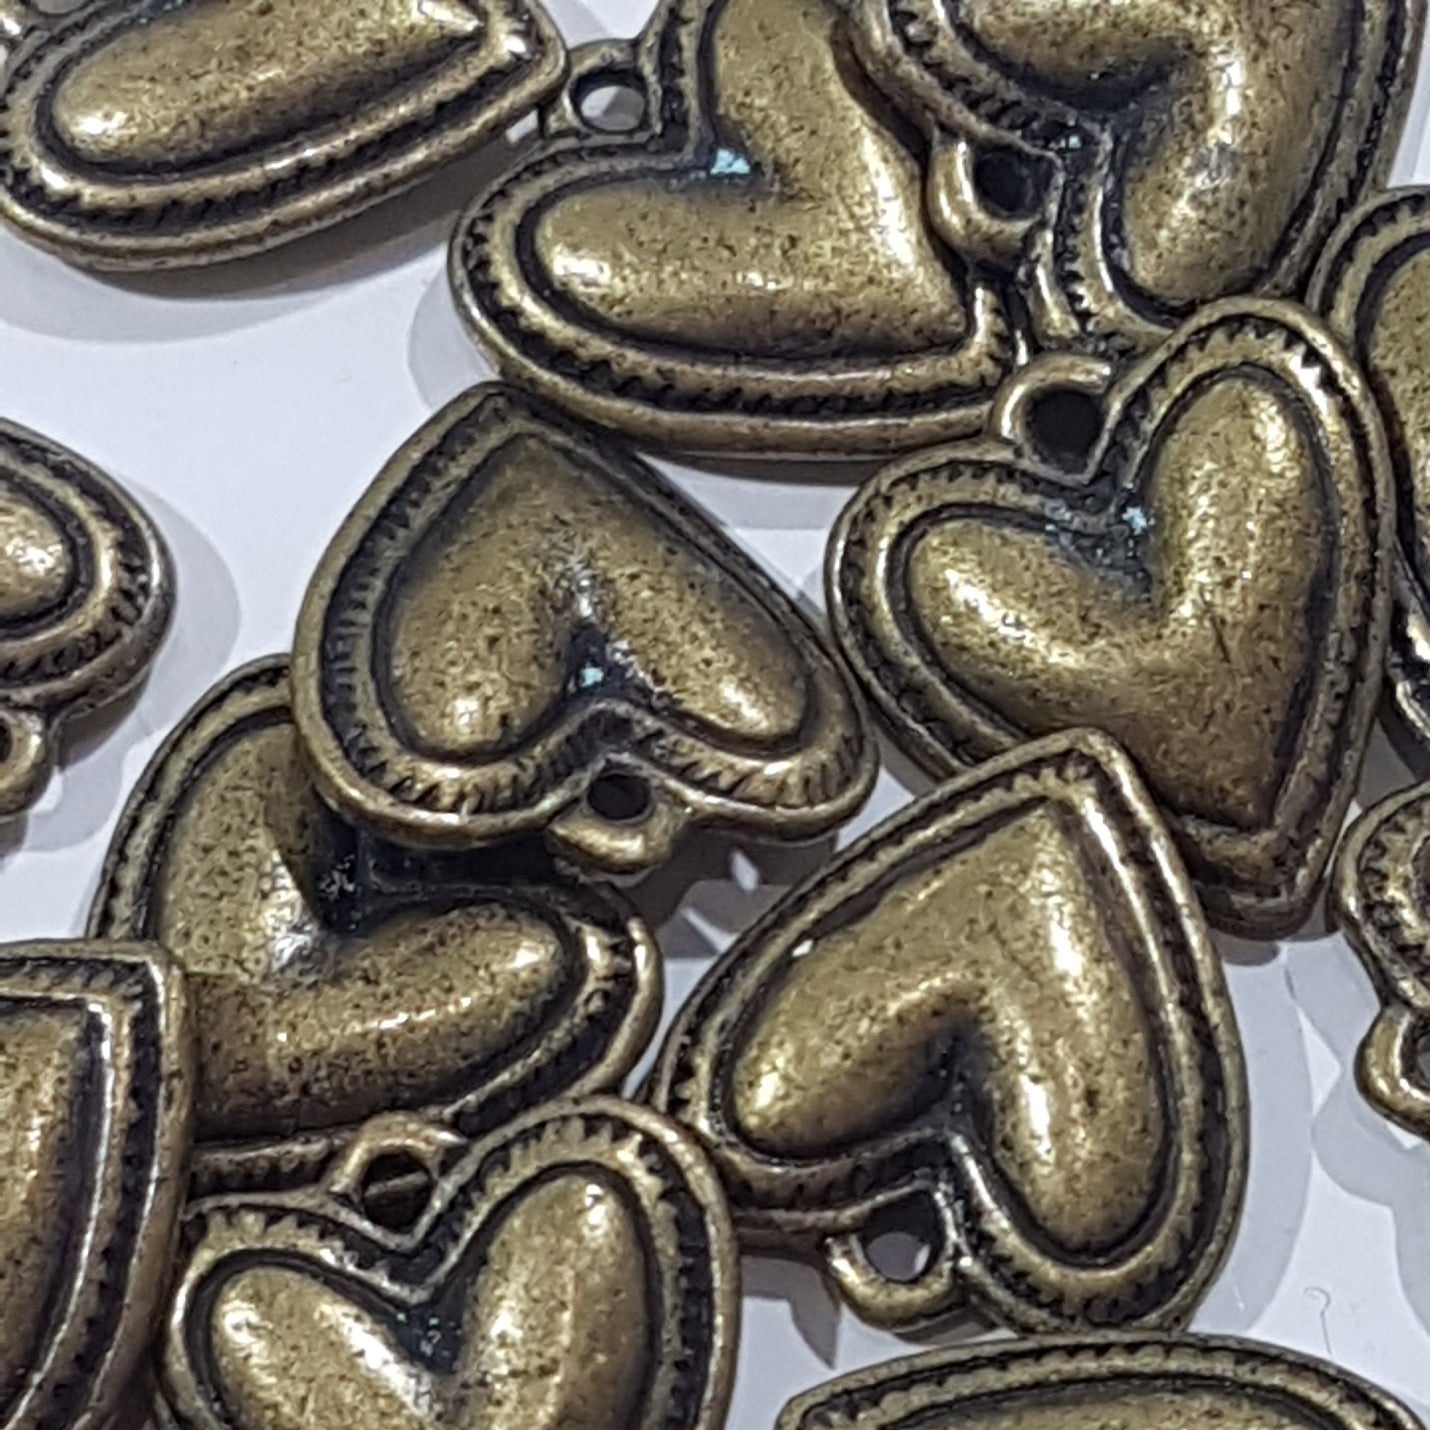 Bronze Vintage Style Heart Shaped Charm Pendant